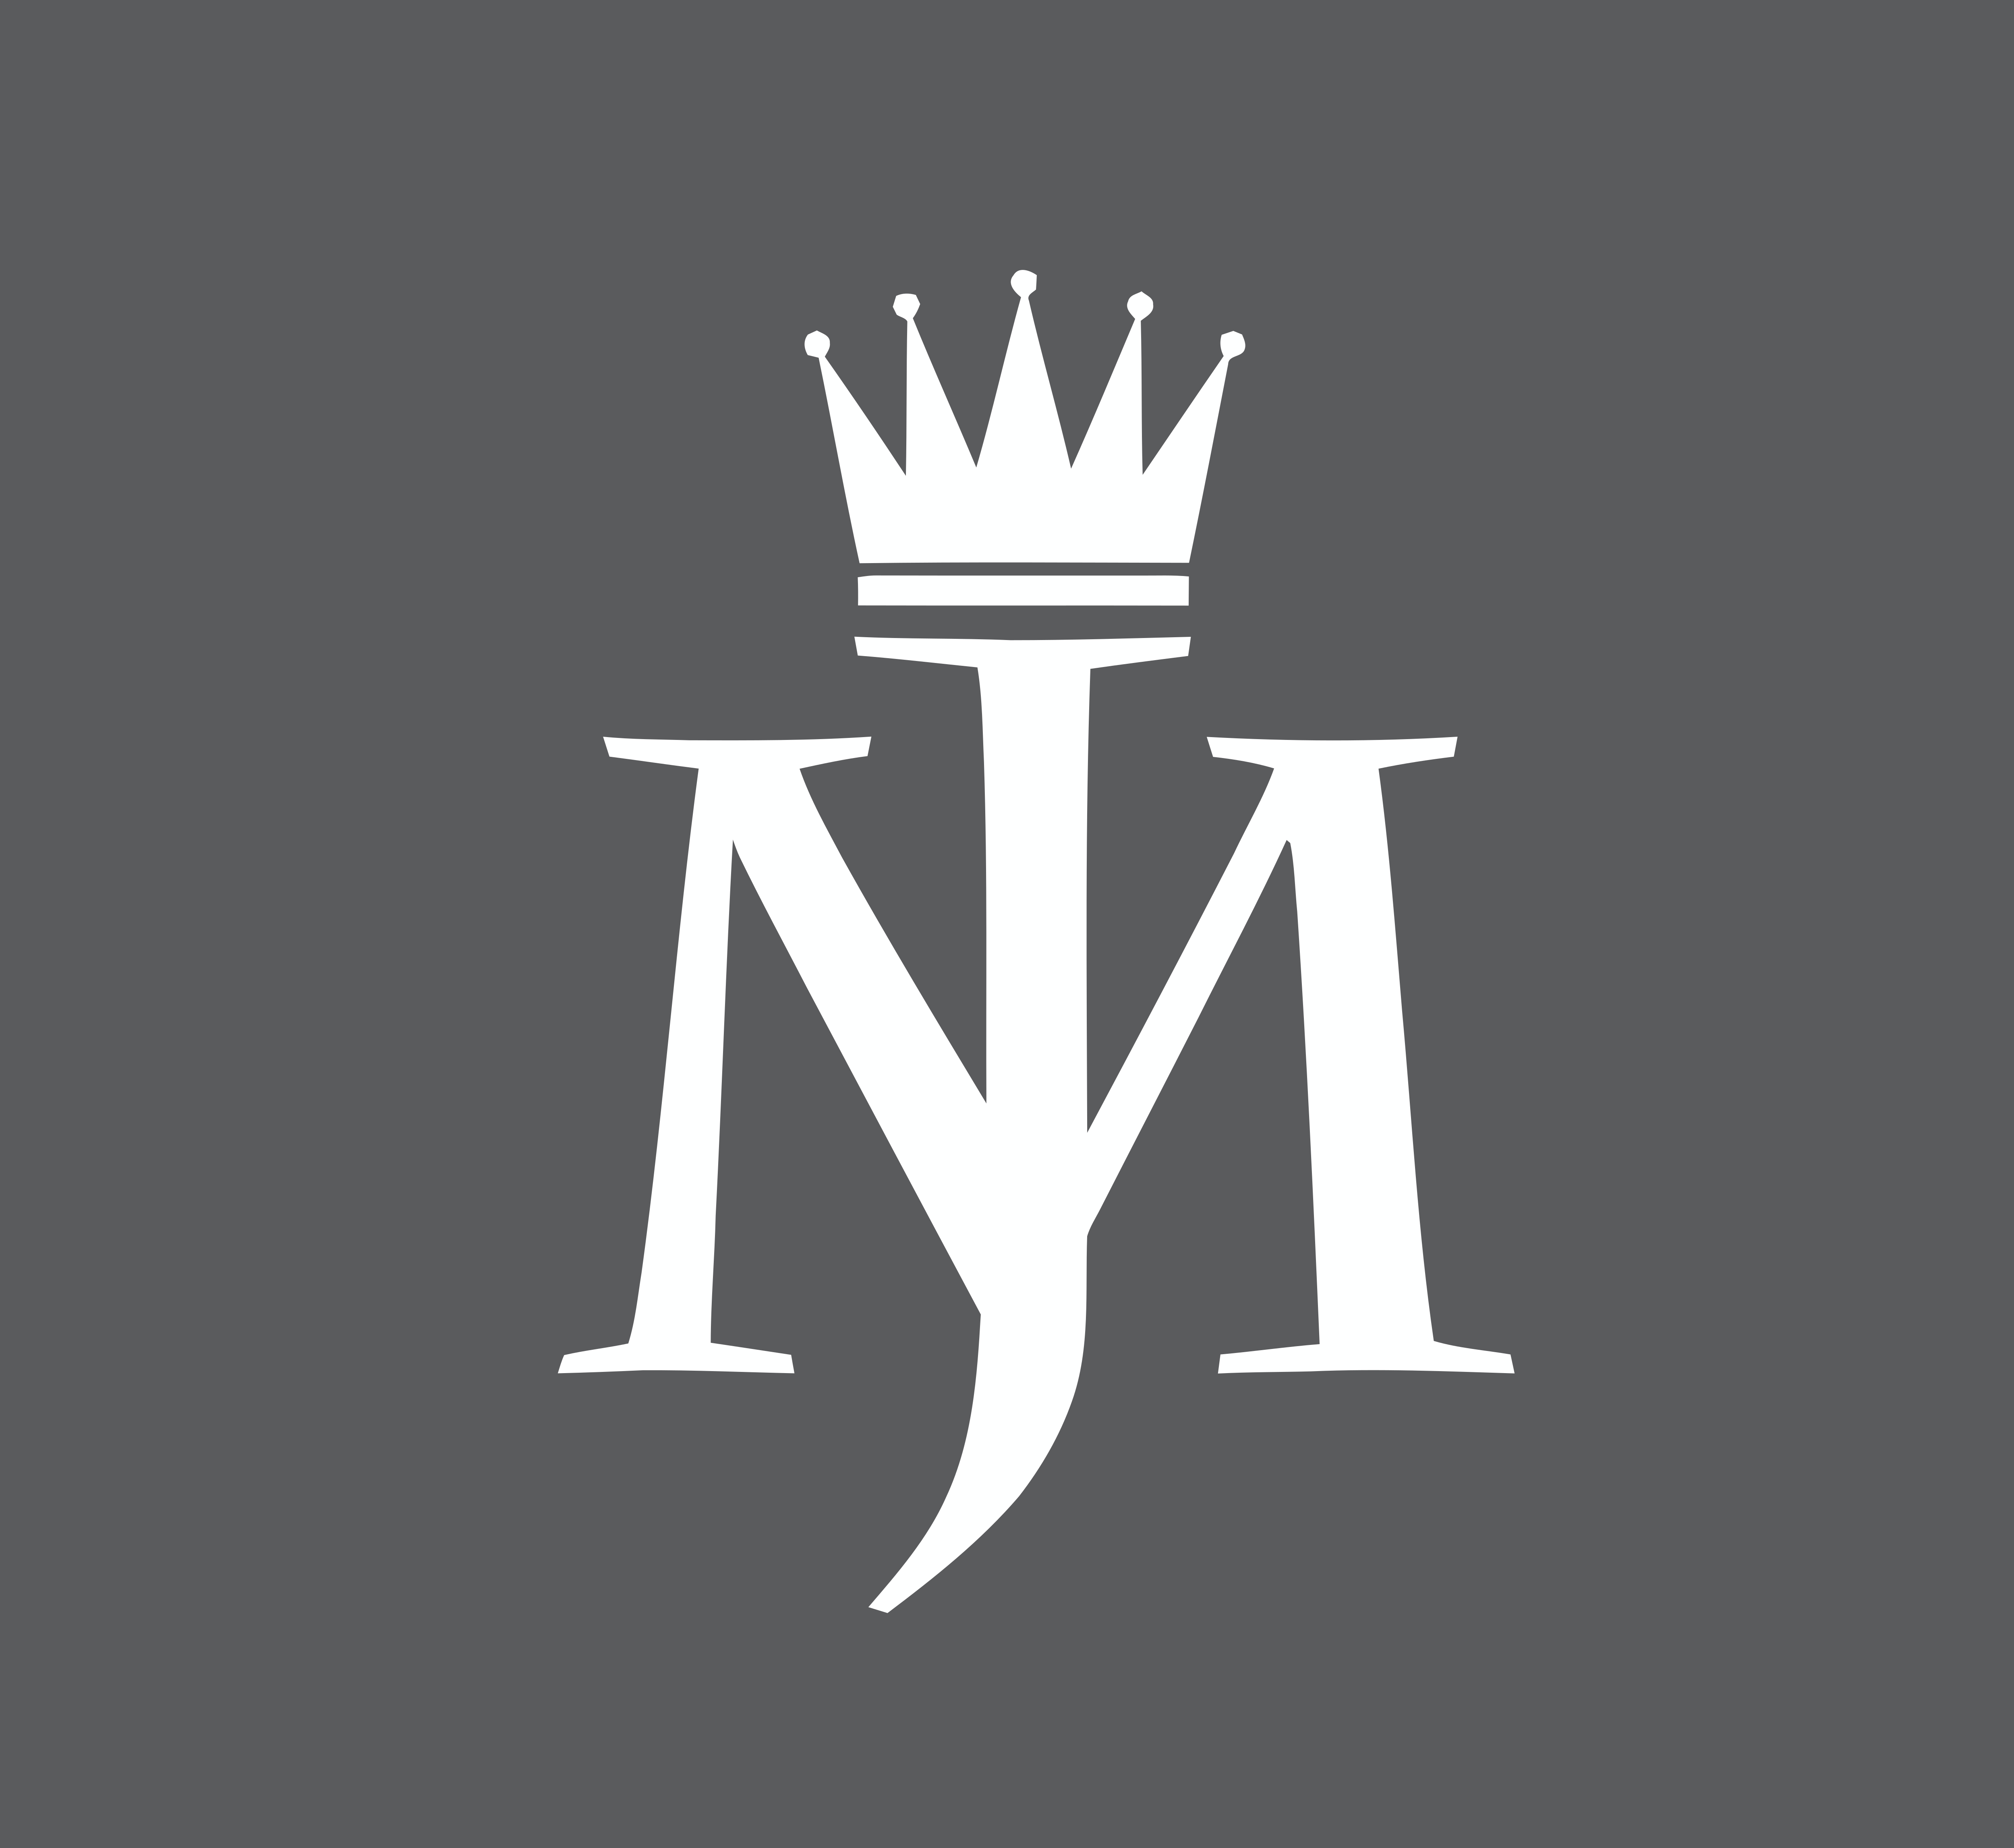 michael jackson logo font